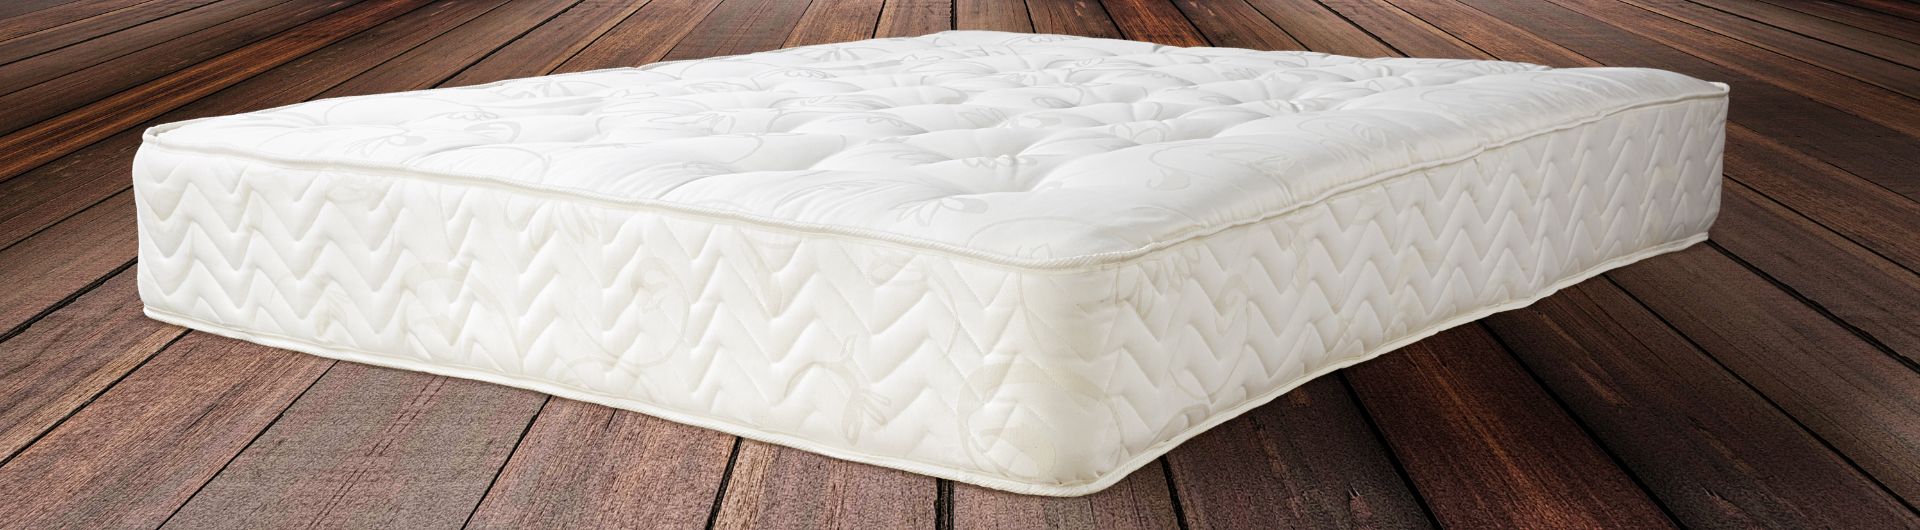 Single Mattress 2000 pocket sprung luxury mattress – the perfect mattress for the perfect sleep.